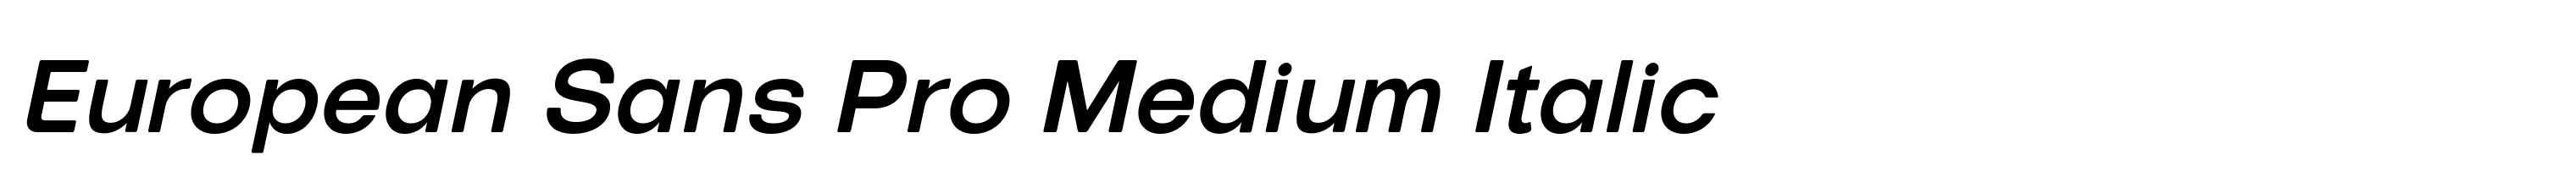 European Sans Pro Medium Italic